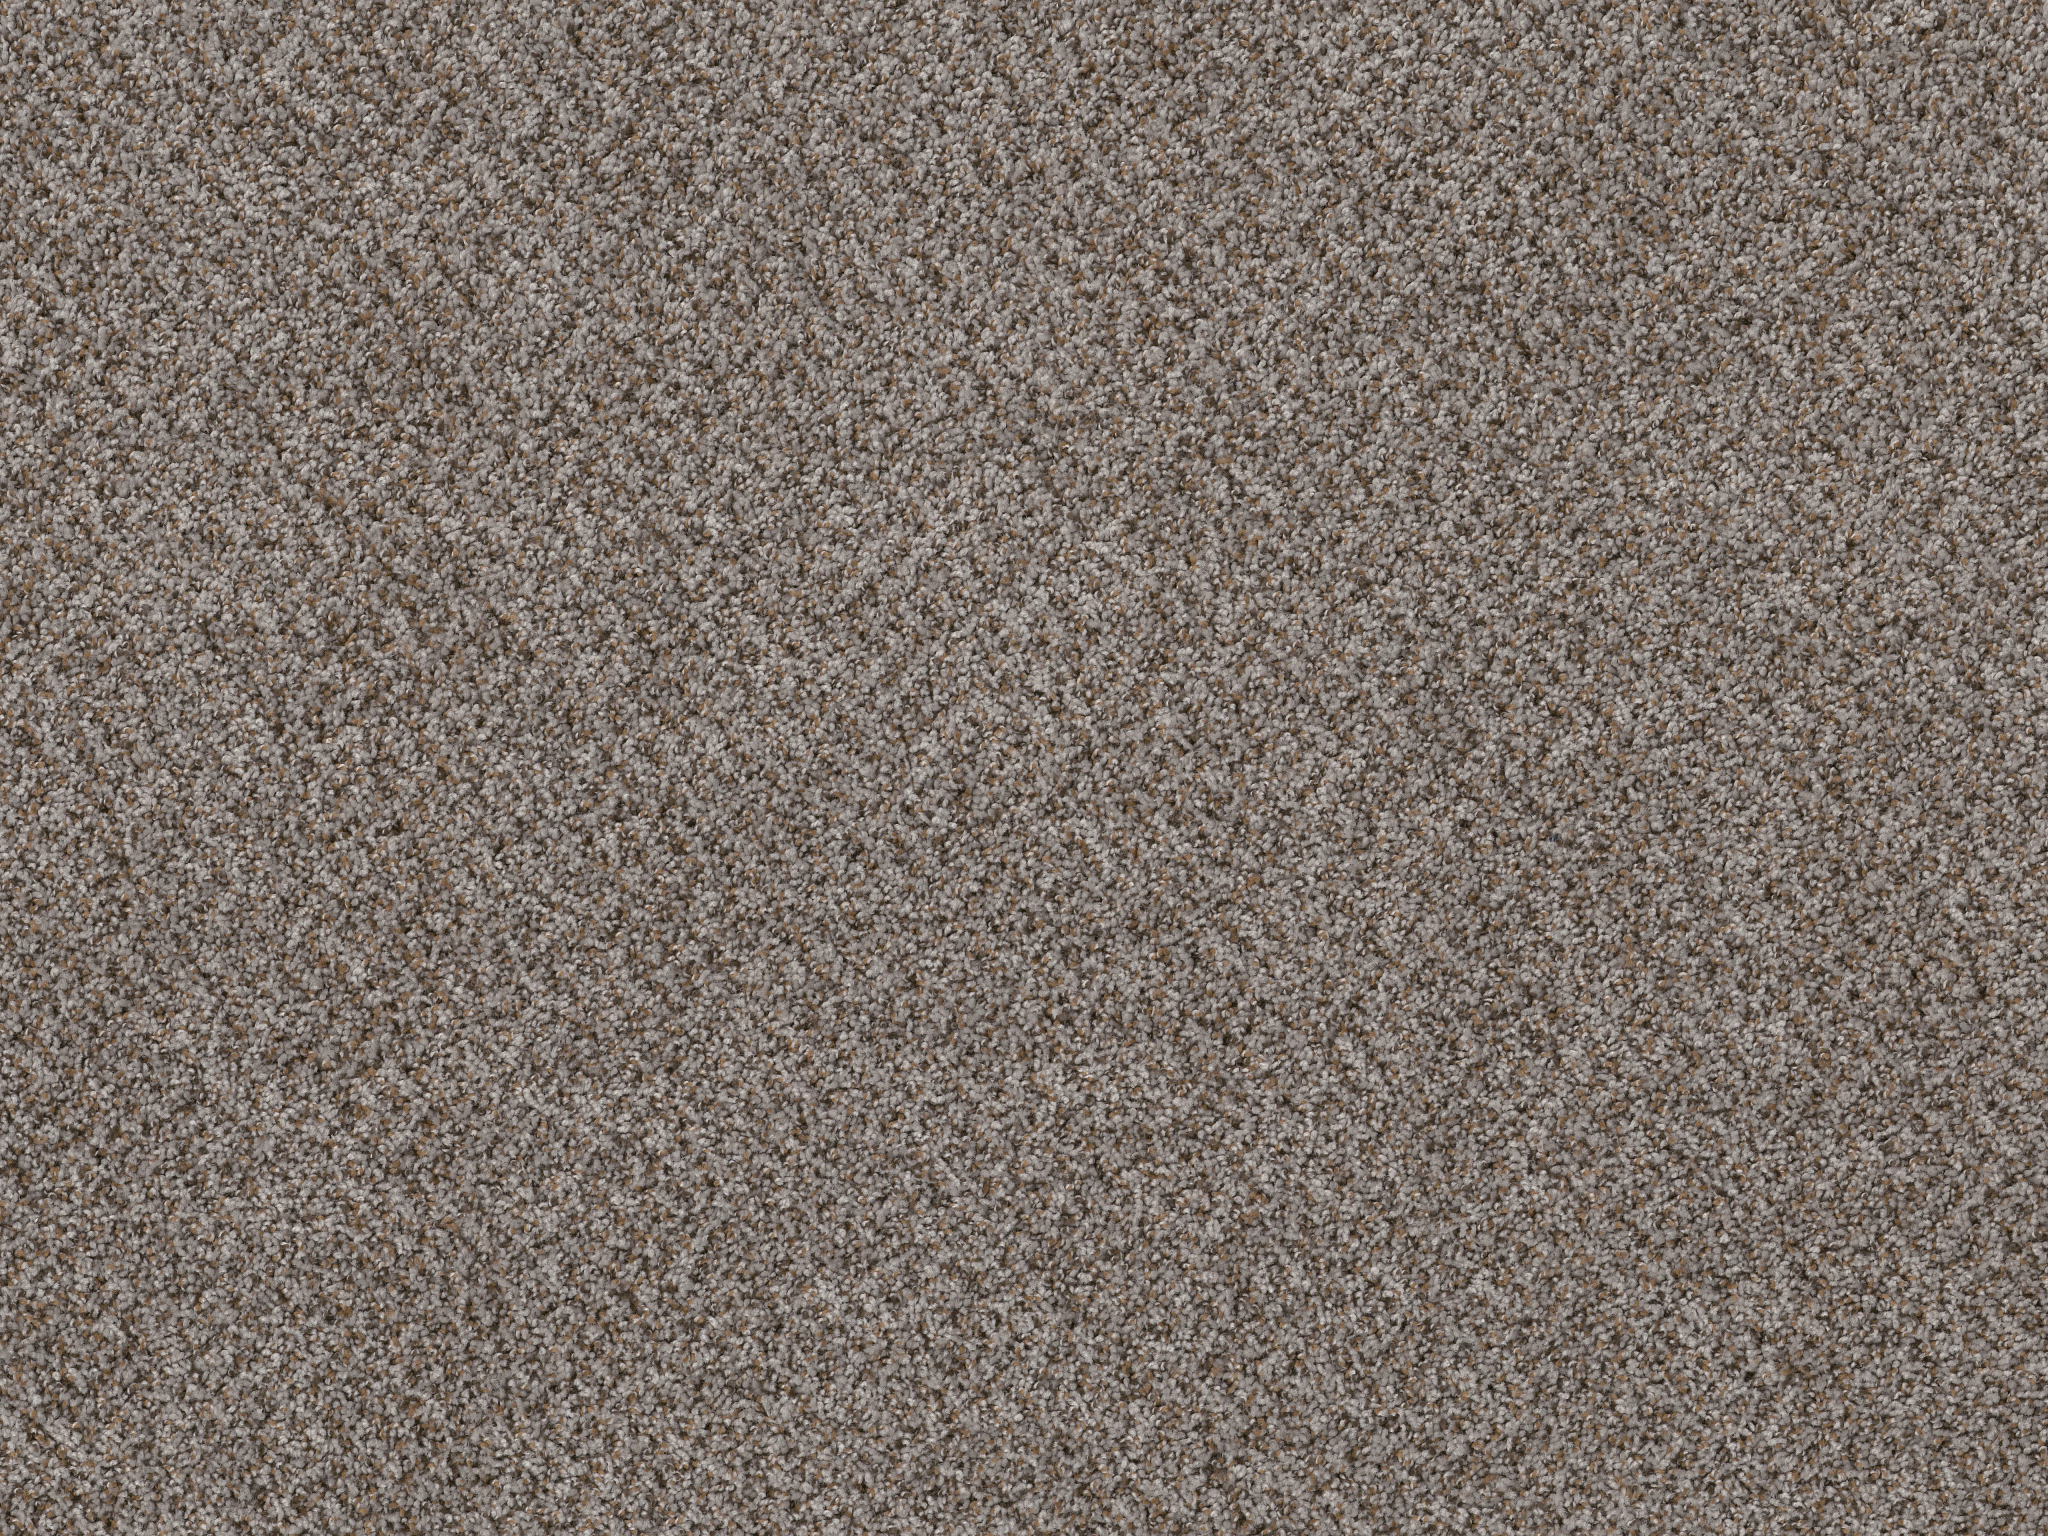 Style 50 Plus (B) Carpet - Caldera(B) Zoomed Swatch Thumbnail